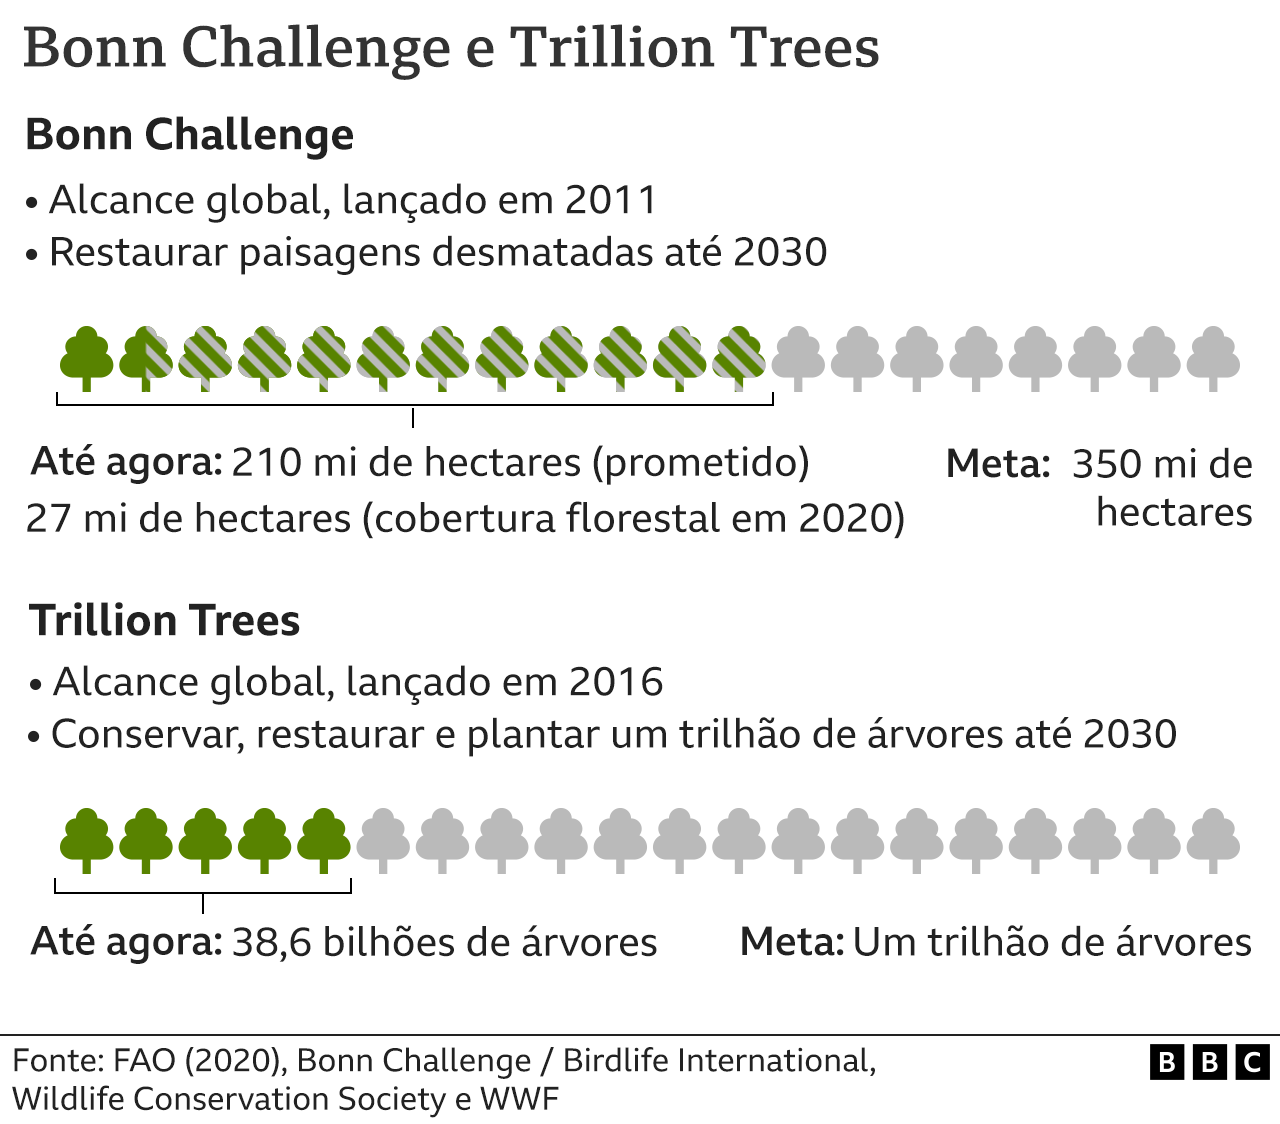 Bonn Challenge e Trillion Trees